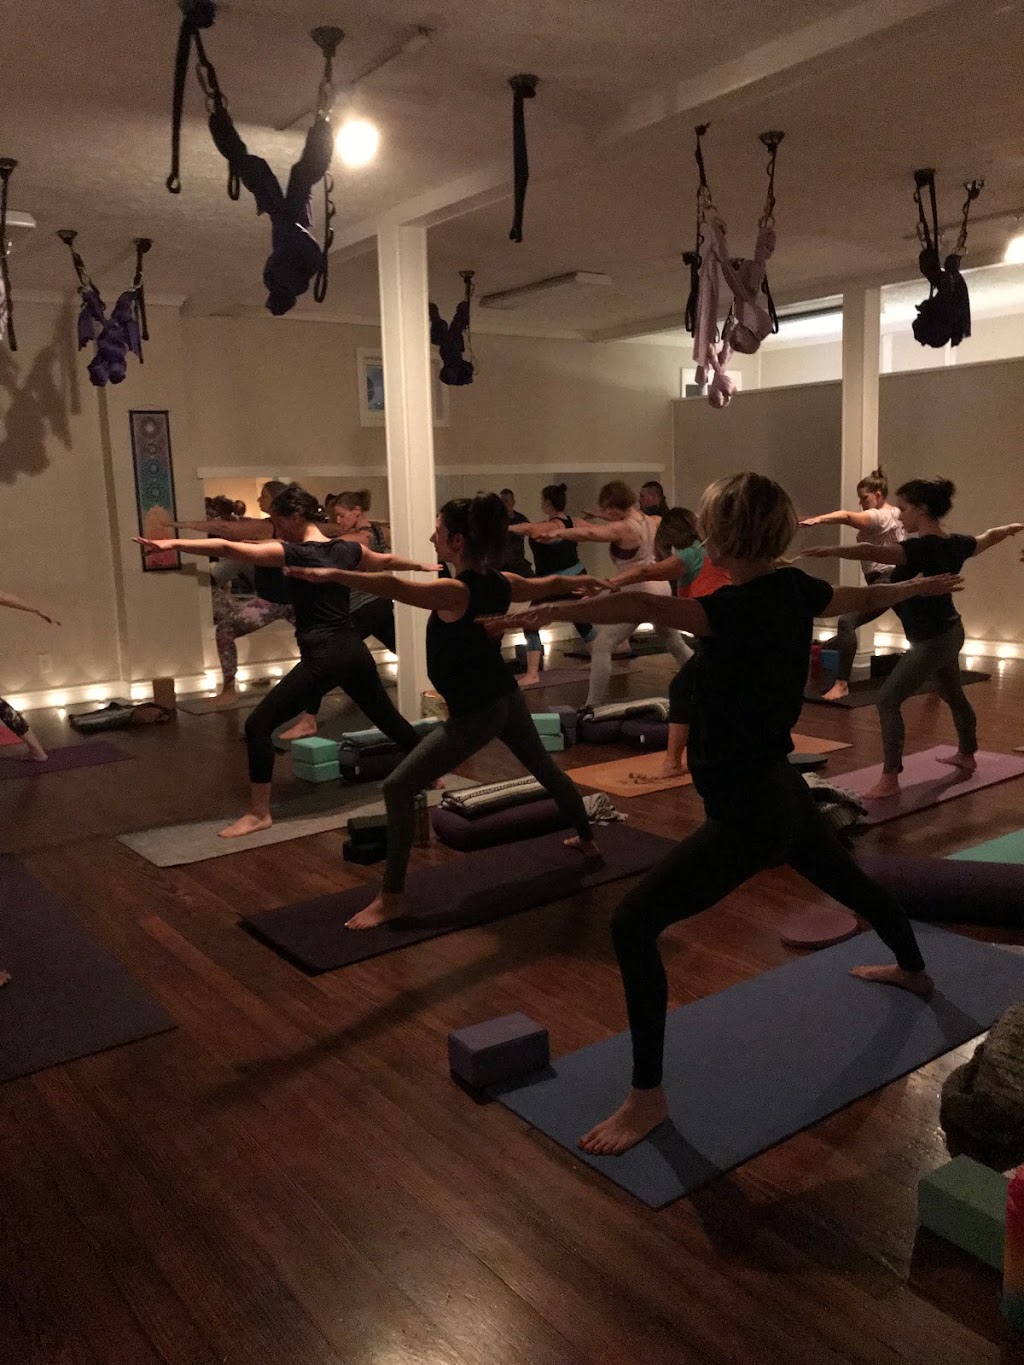 Elevate Yoga Pittsburgh | 271 Main St, Imperial, PA 15126, USA | Phone: (412) 401-9052